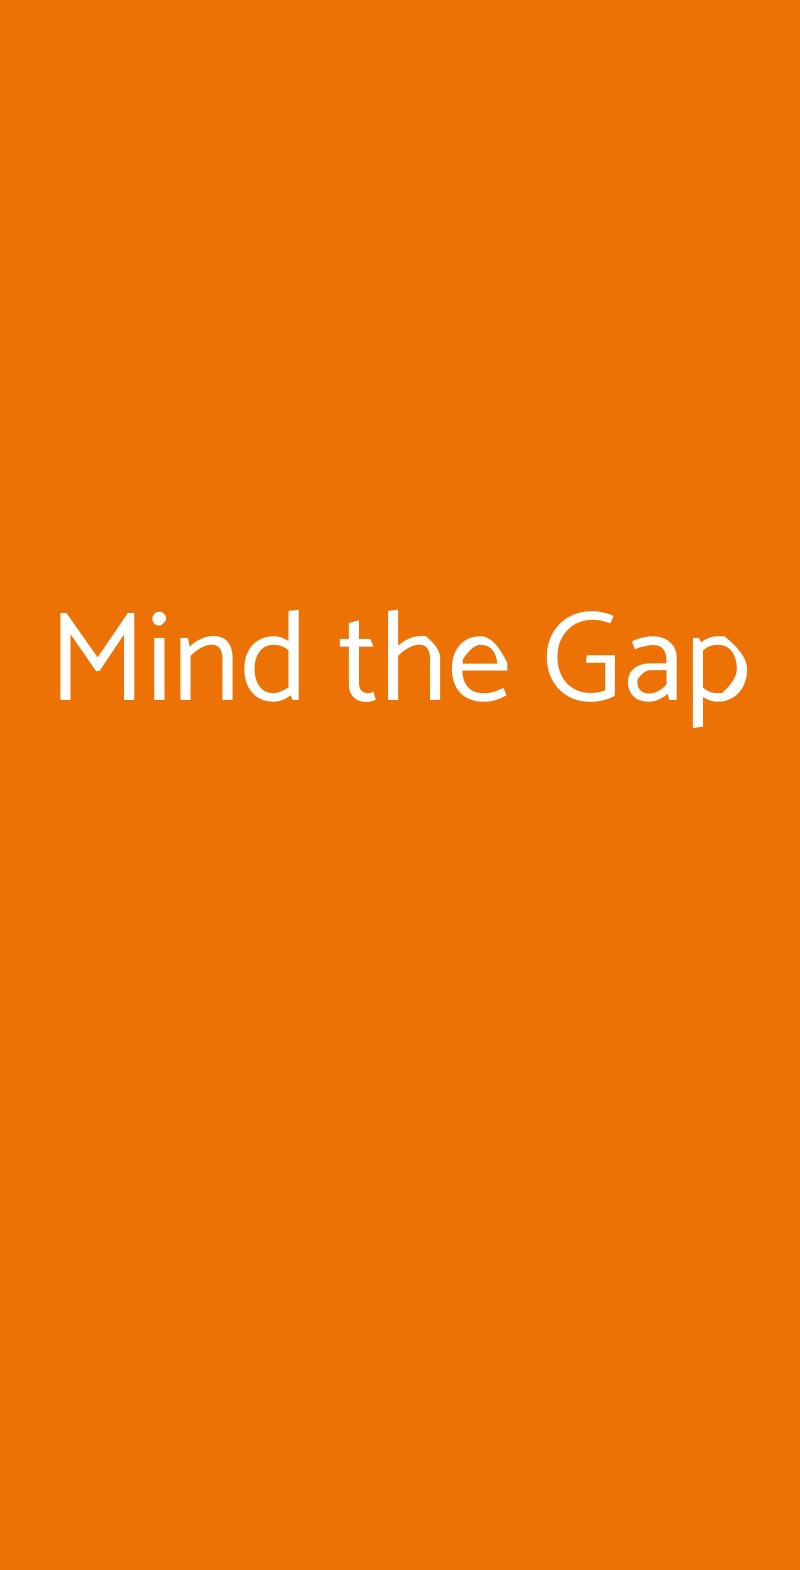 Mind the Gap Milano menù 1 pagina